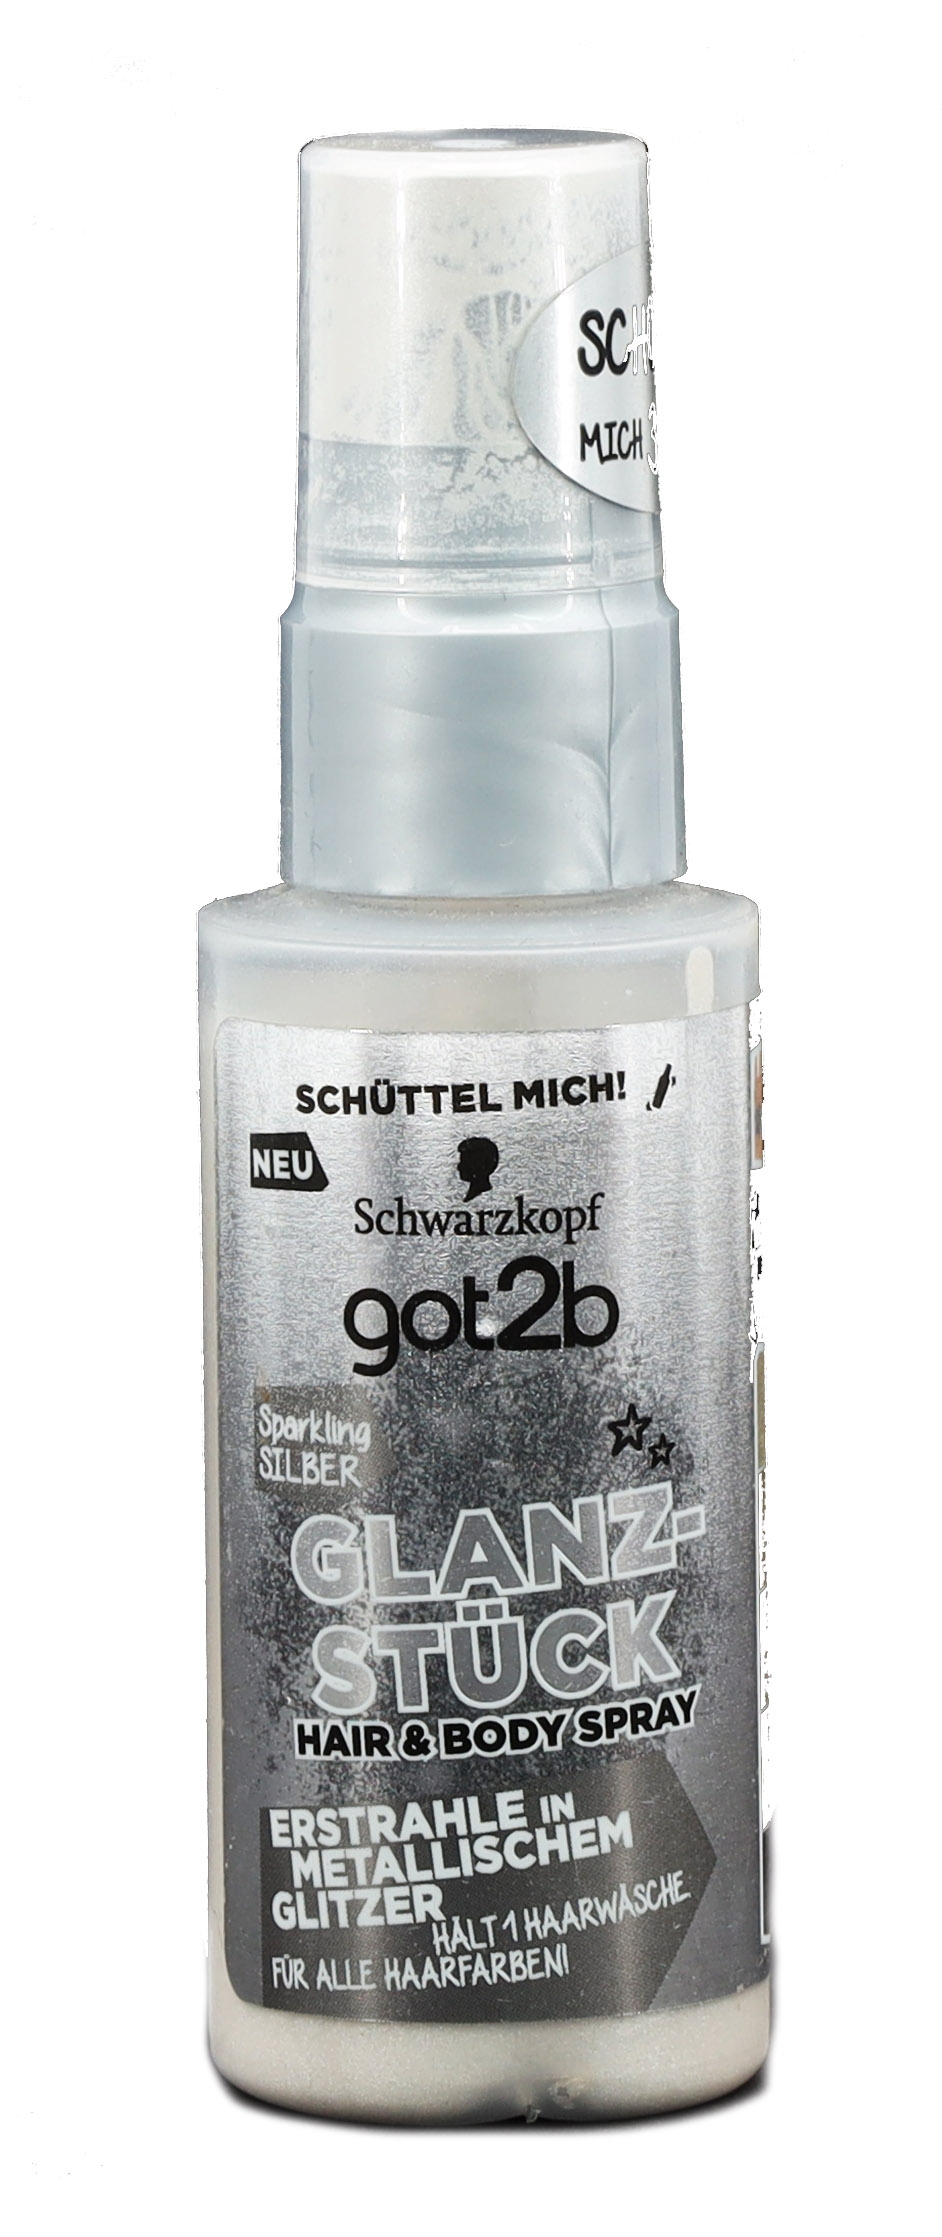 Schwarzkopf got2b Glanzstück Sparkling Silber Haar&Körperspray 50ml